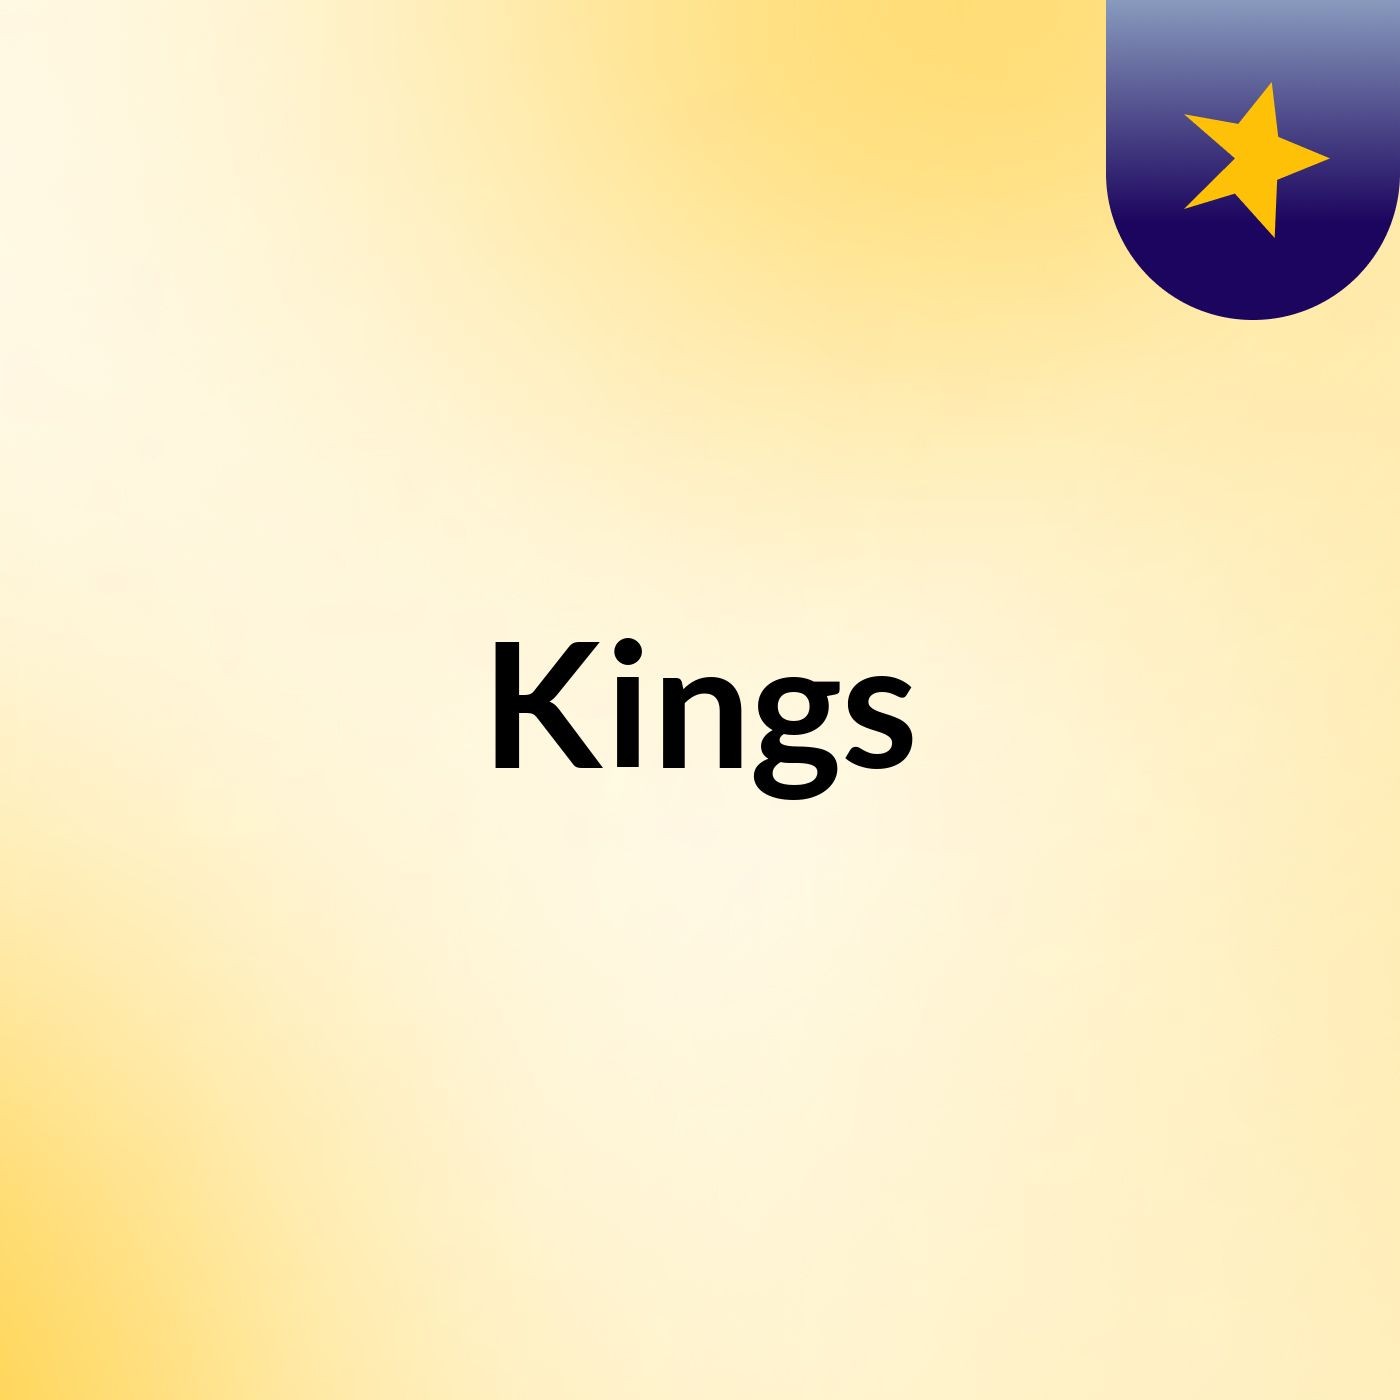 Episode 3 - Kings